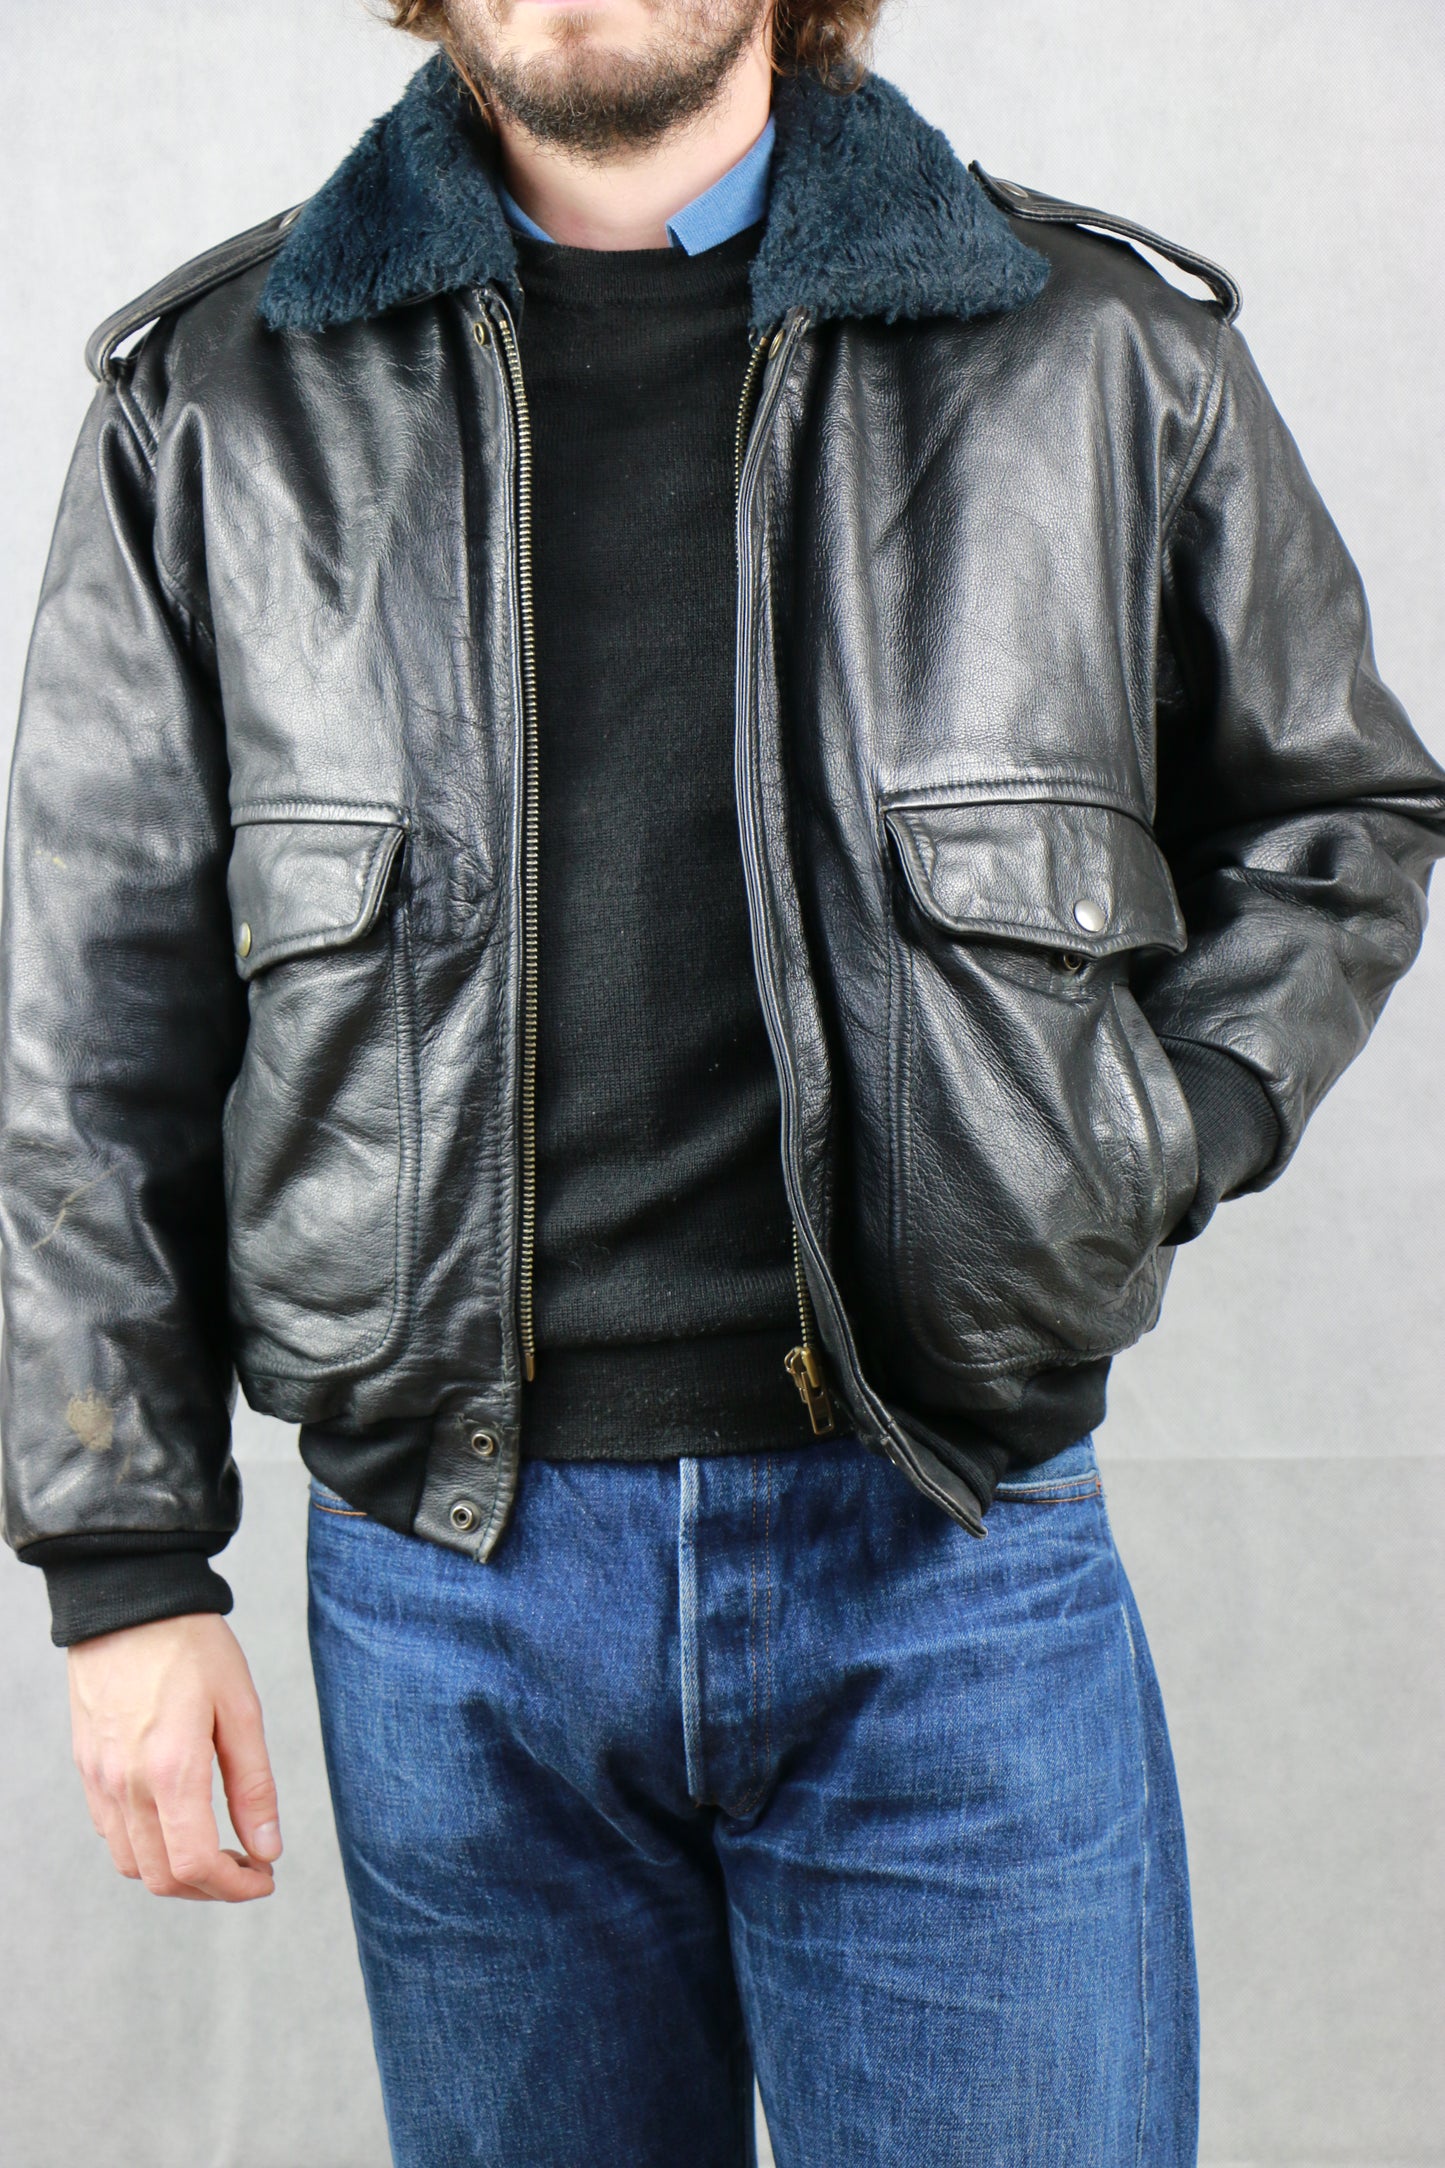 A-2 Leather Pilot Jacket - vintage clothing clochard92.com